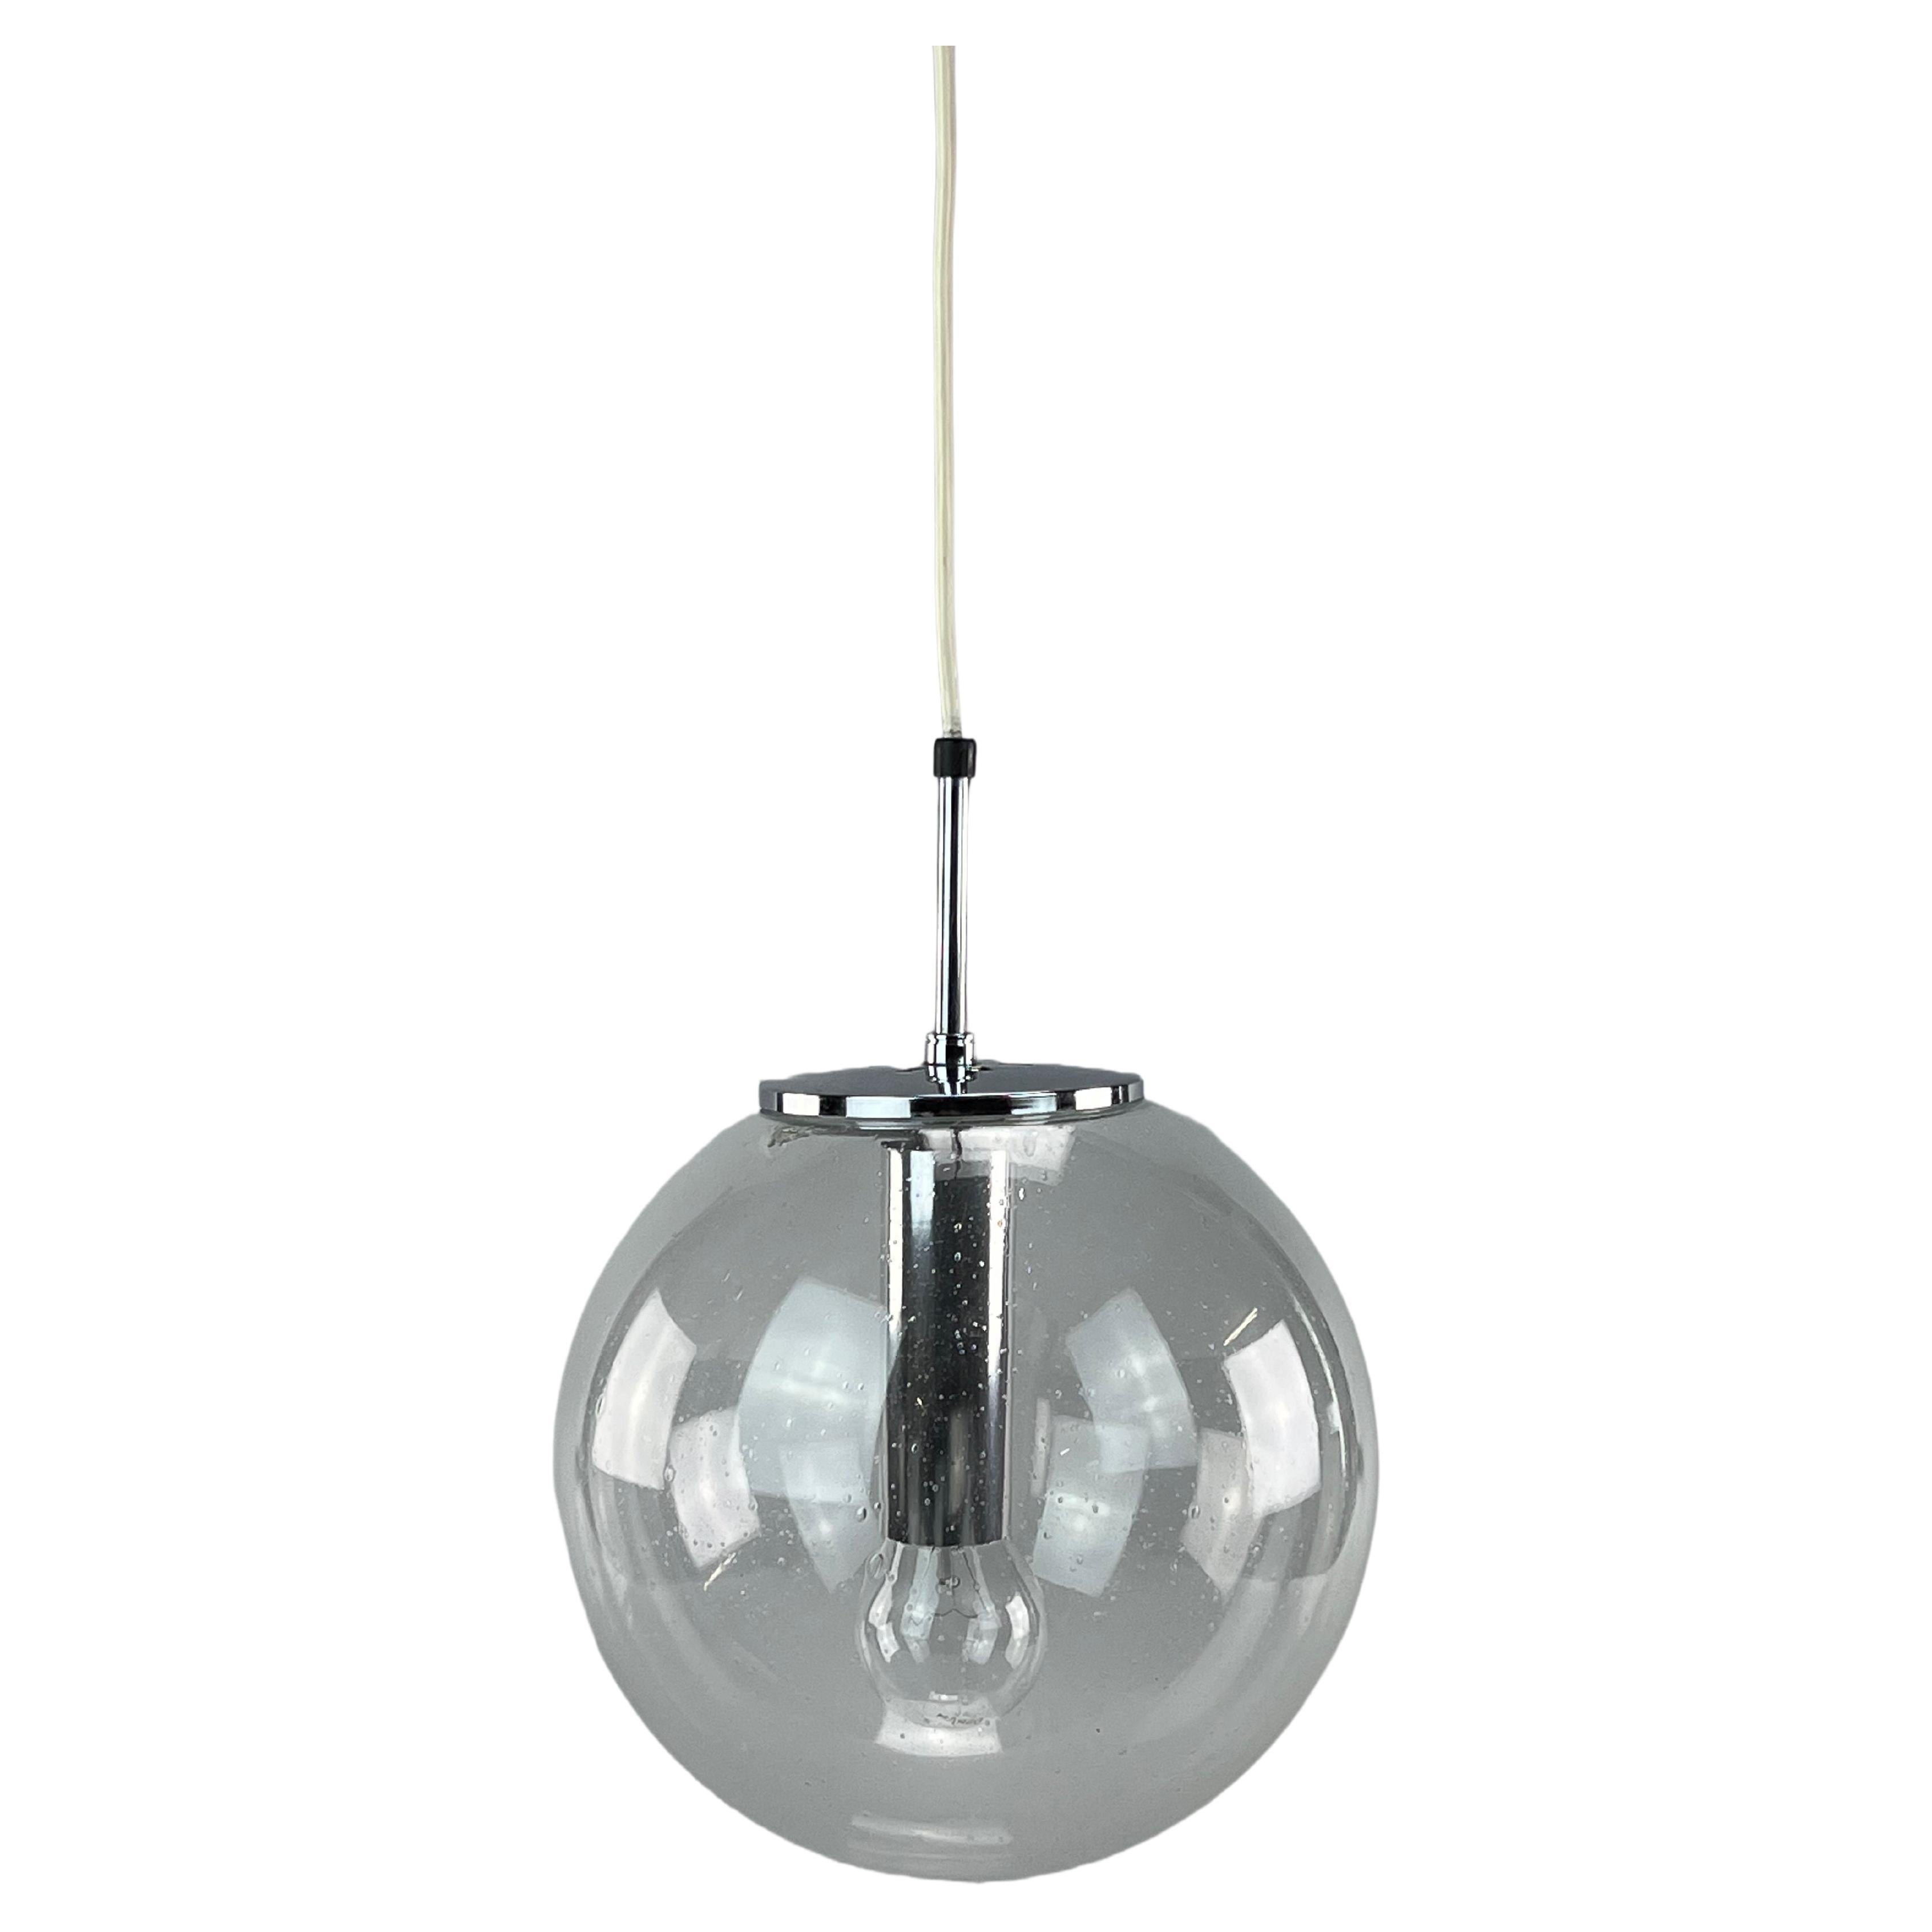 60s 70s Lamp Light Ceiling Lamp Limburg Glass Space Age Design For Sale